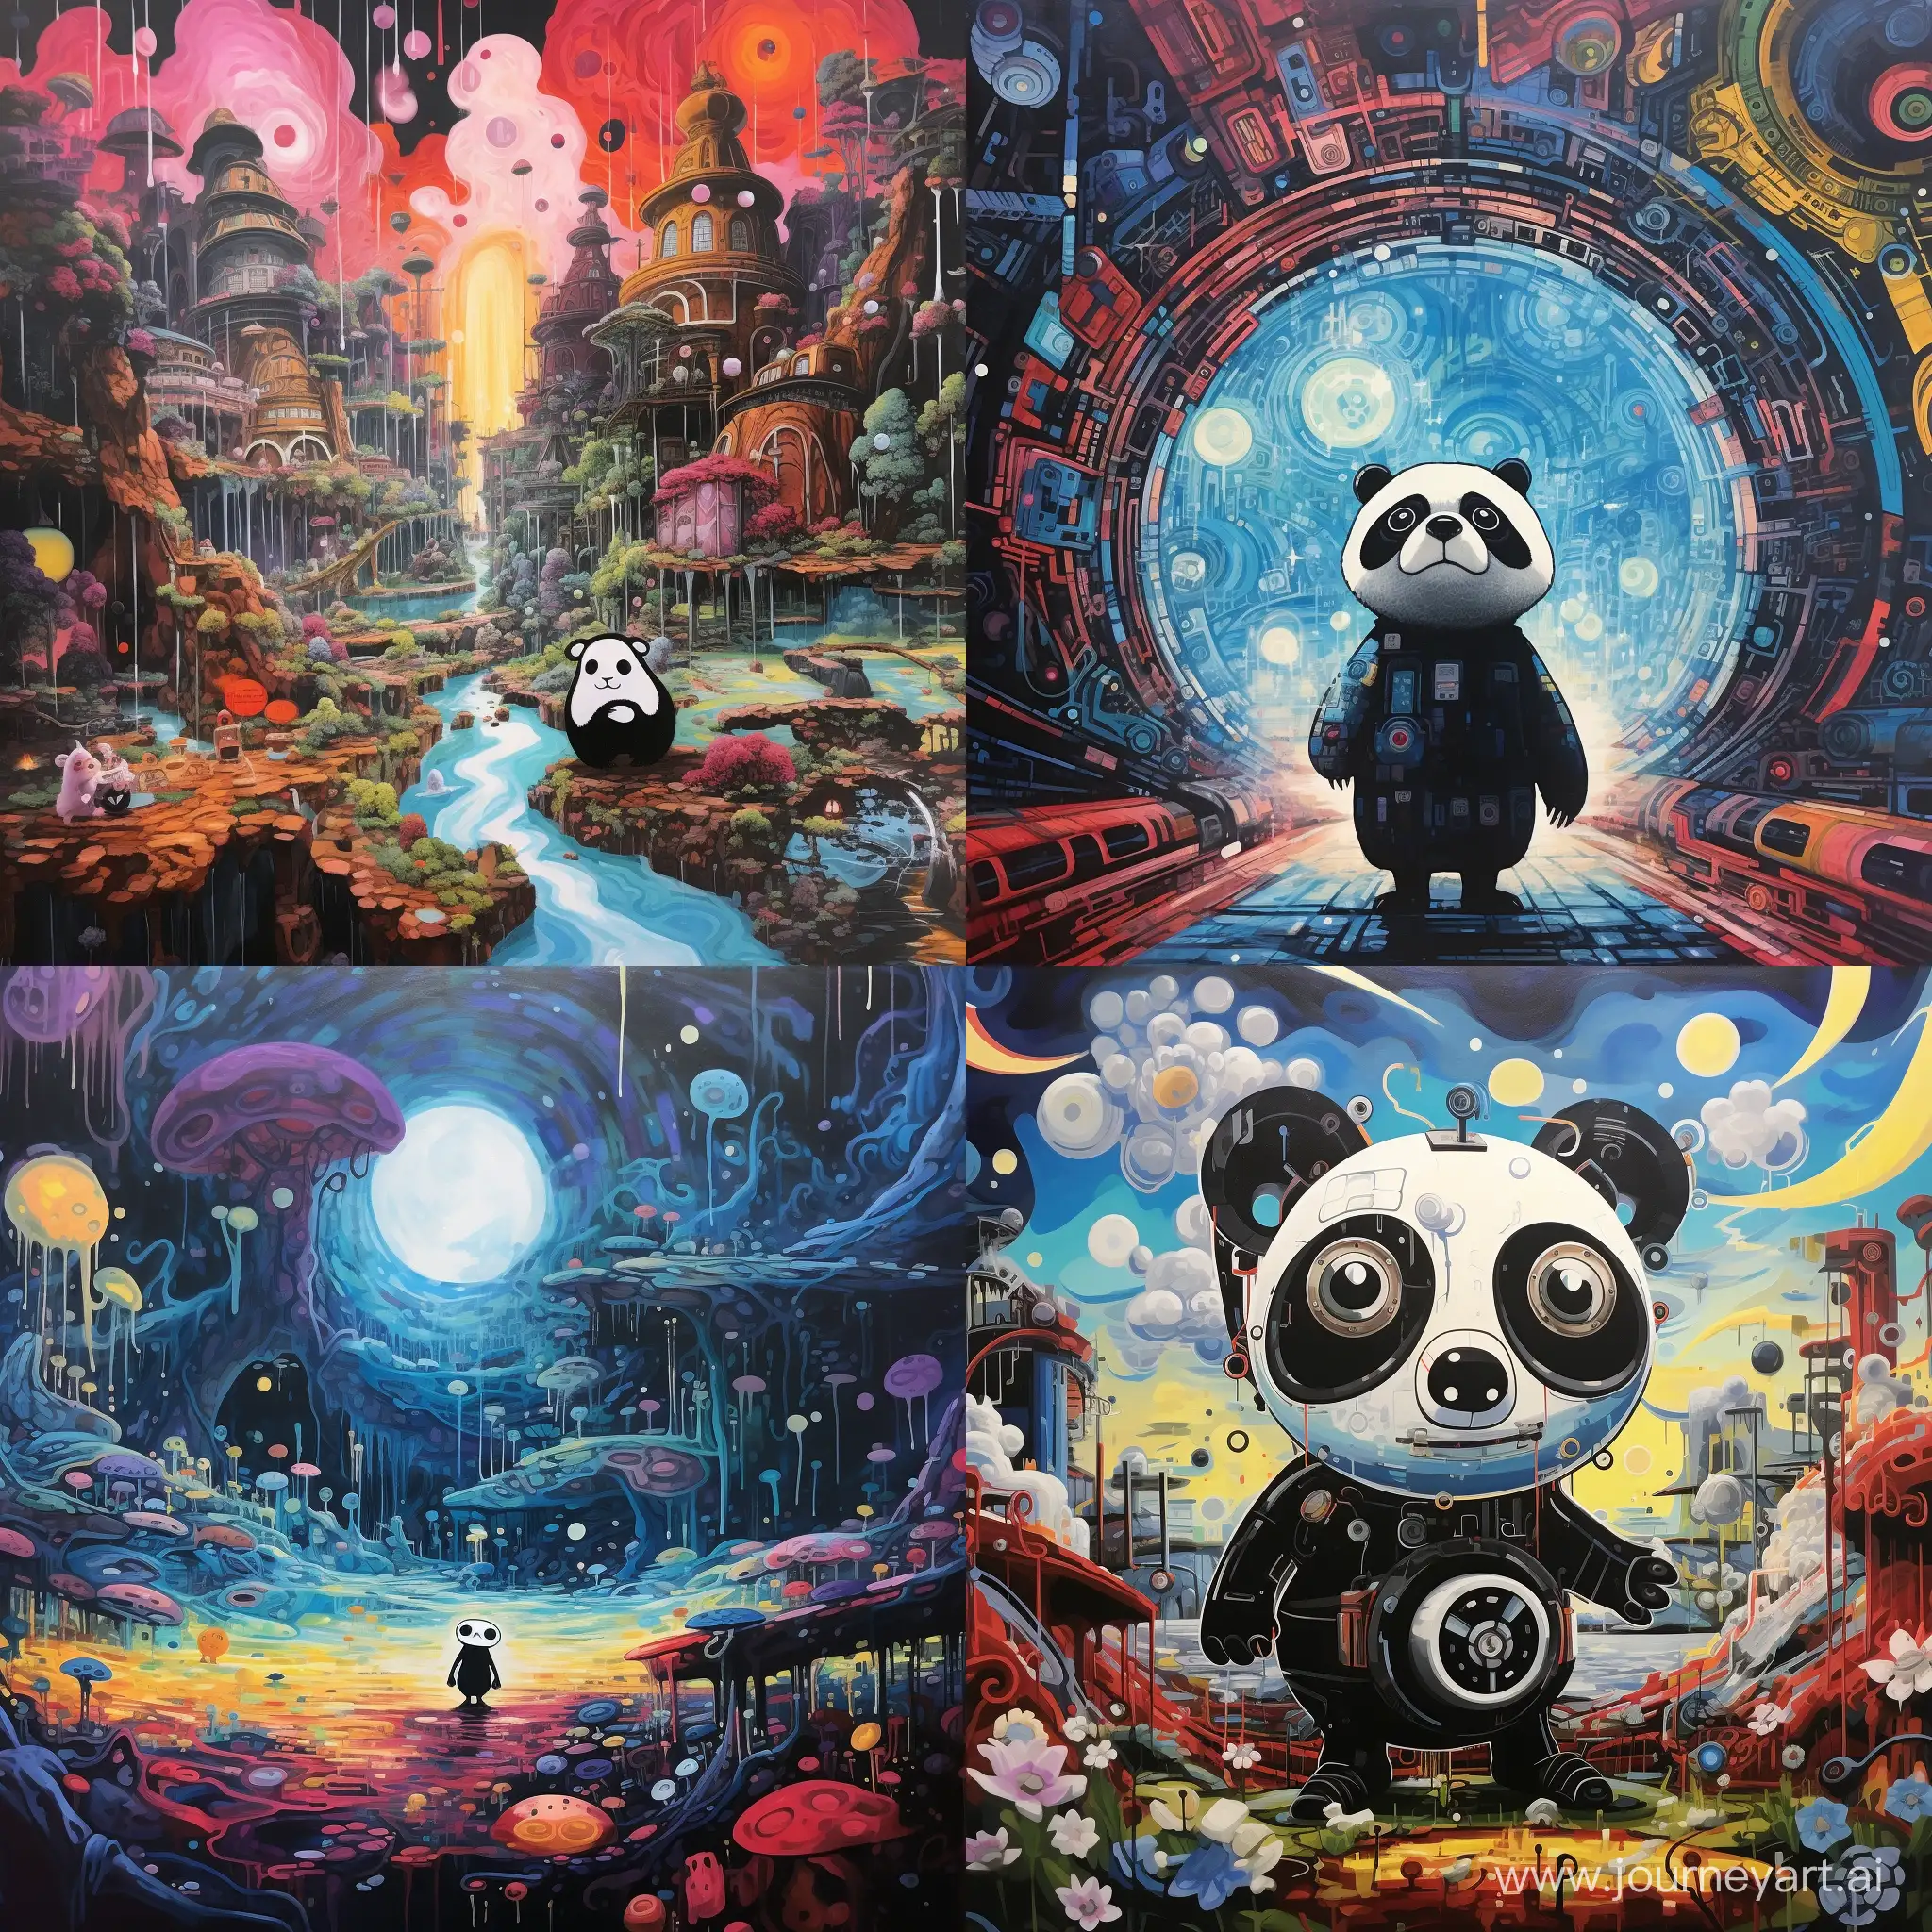 Futuristic-Miyazakiinspired-Acrylic-Painting-of-a-Giant-Panda